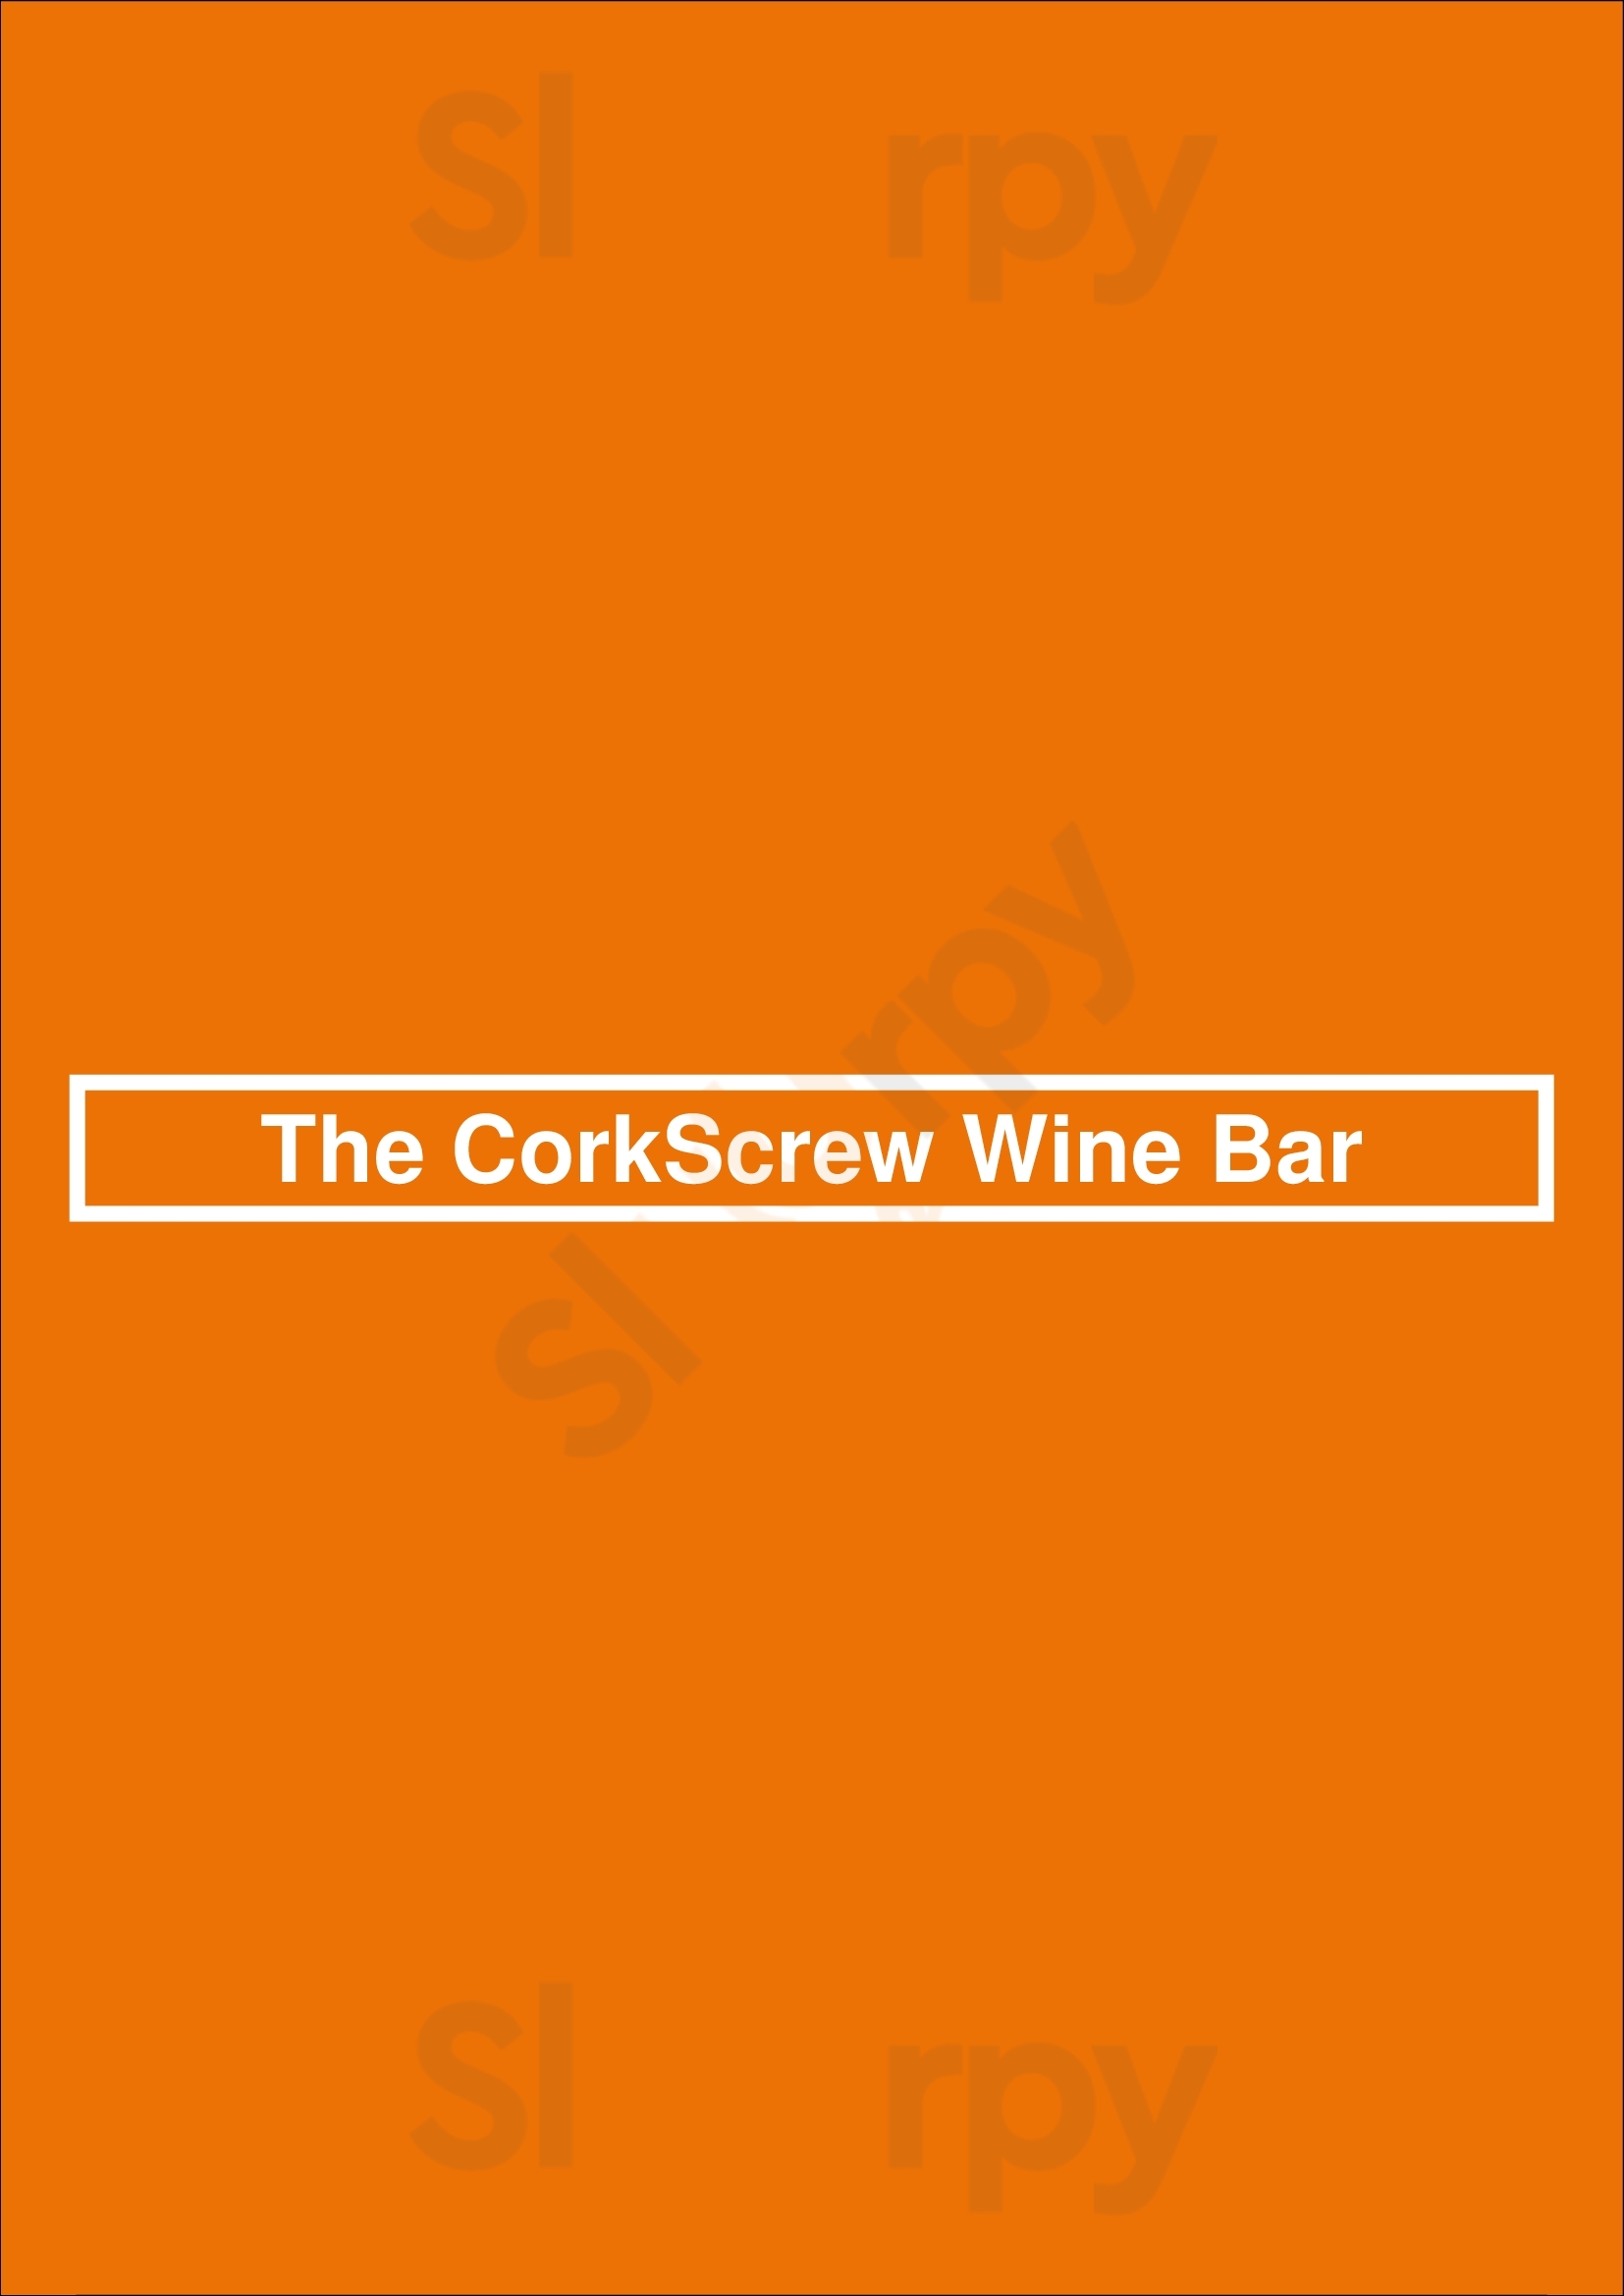 The Corkscrew Lisboa Menu - 1